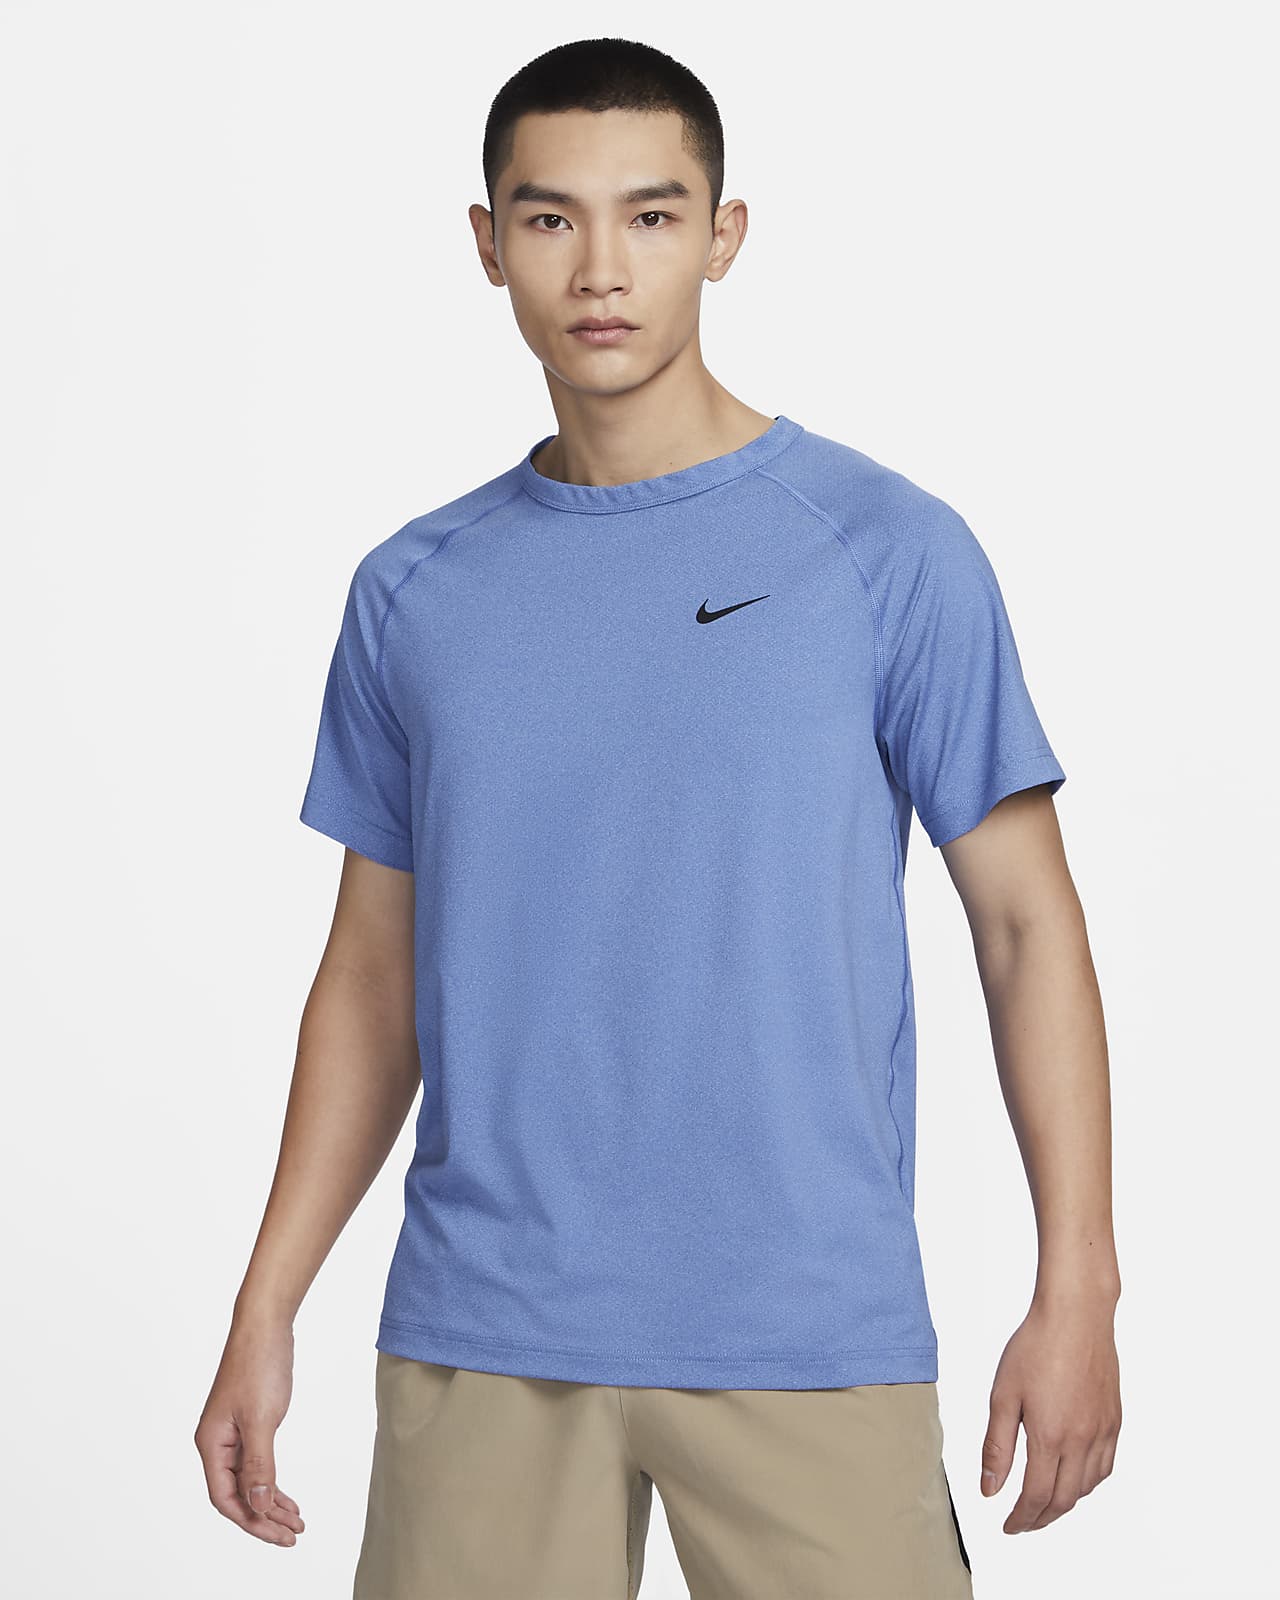 Men's NIKE® Dri-Fit Short Sleeve T-Shirt - Royal Blue, Carbon Gray